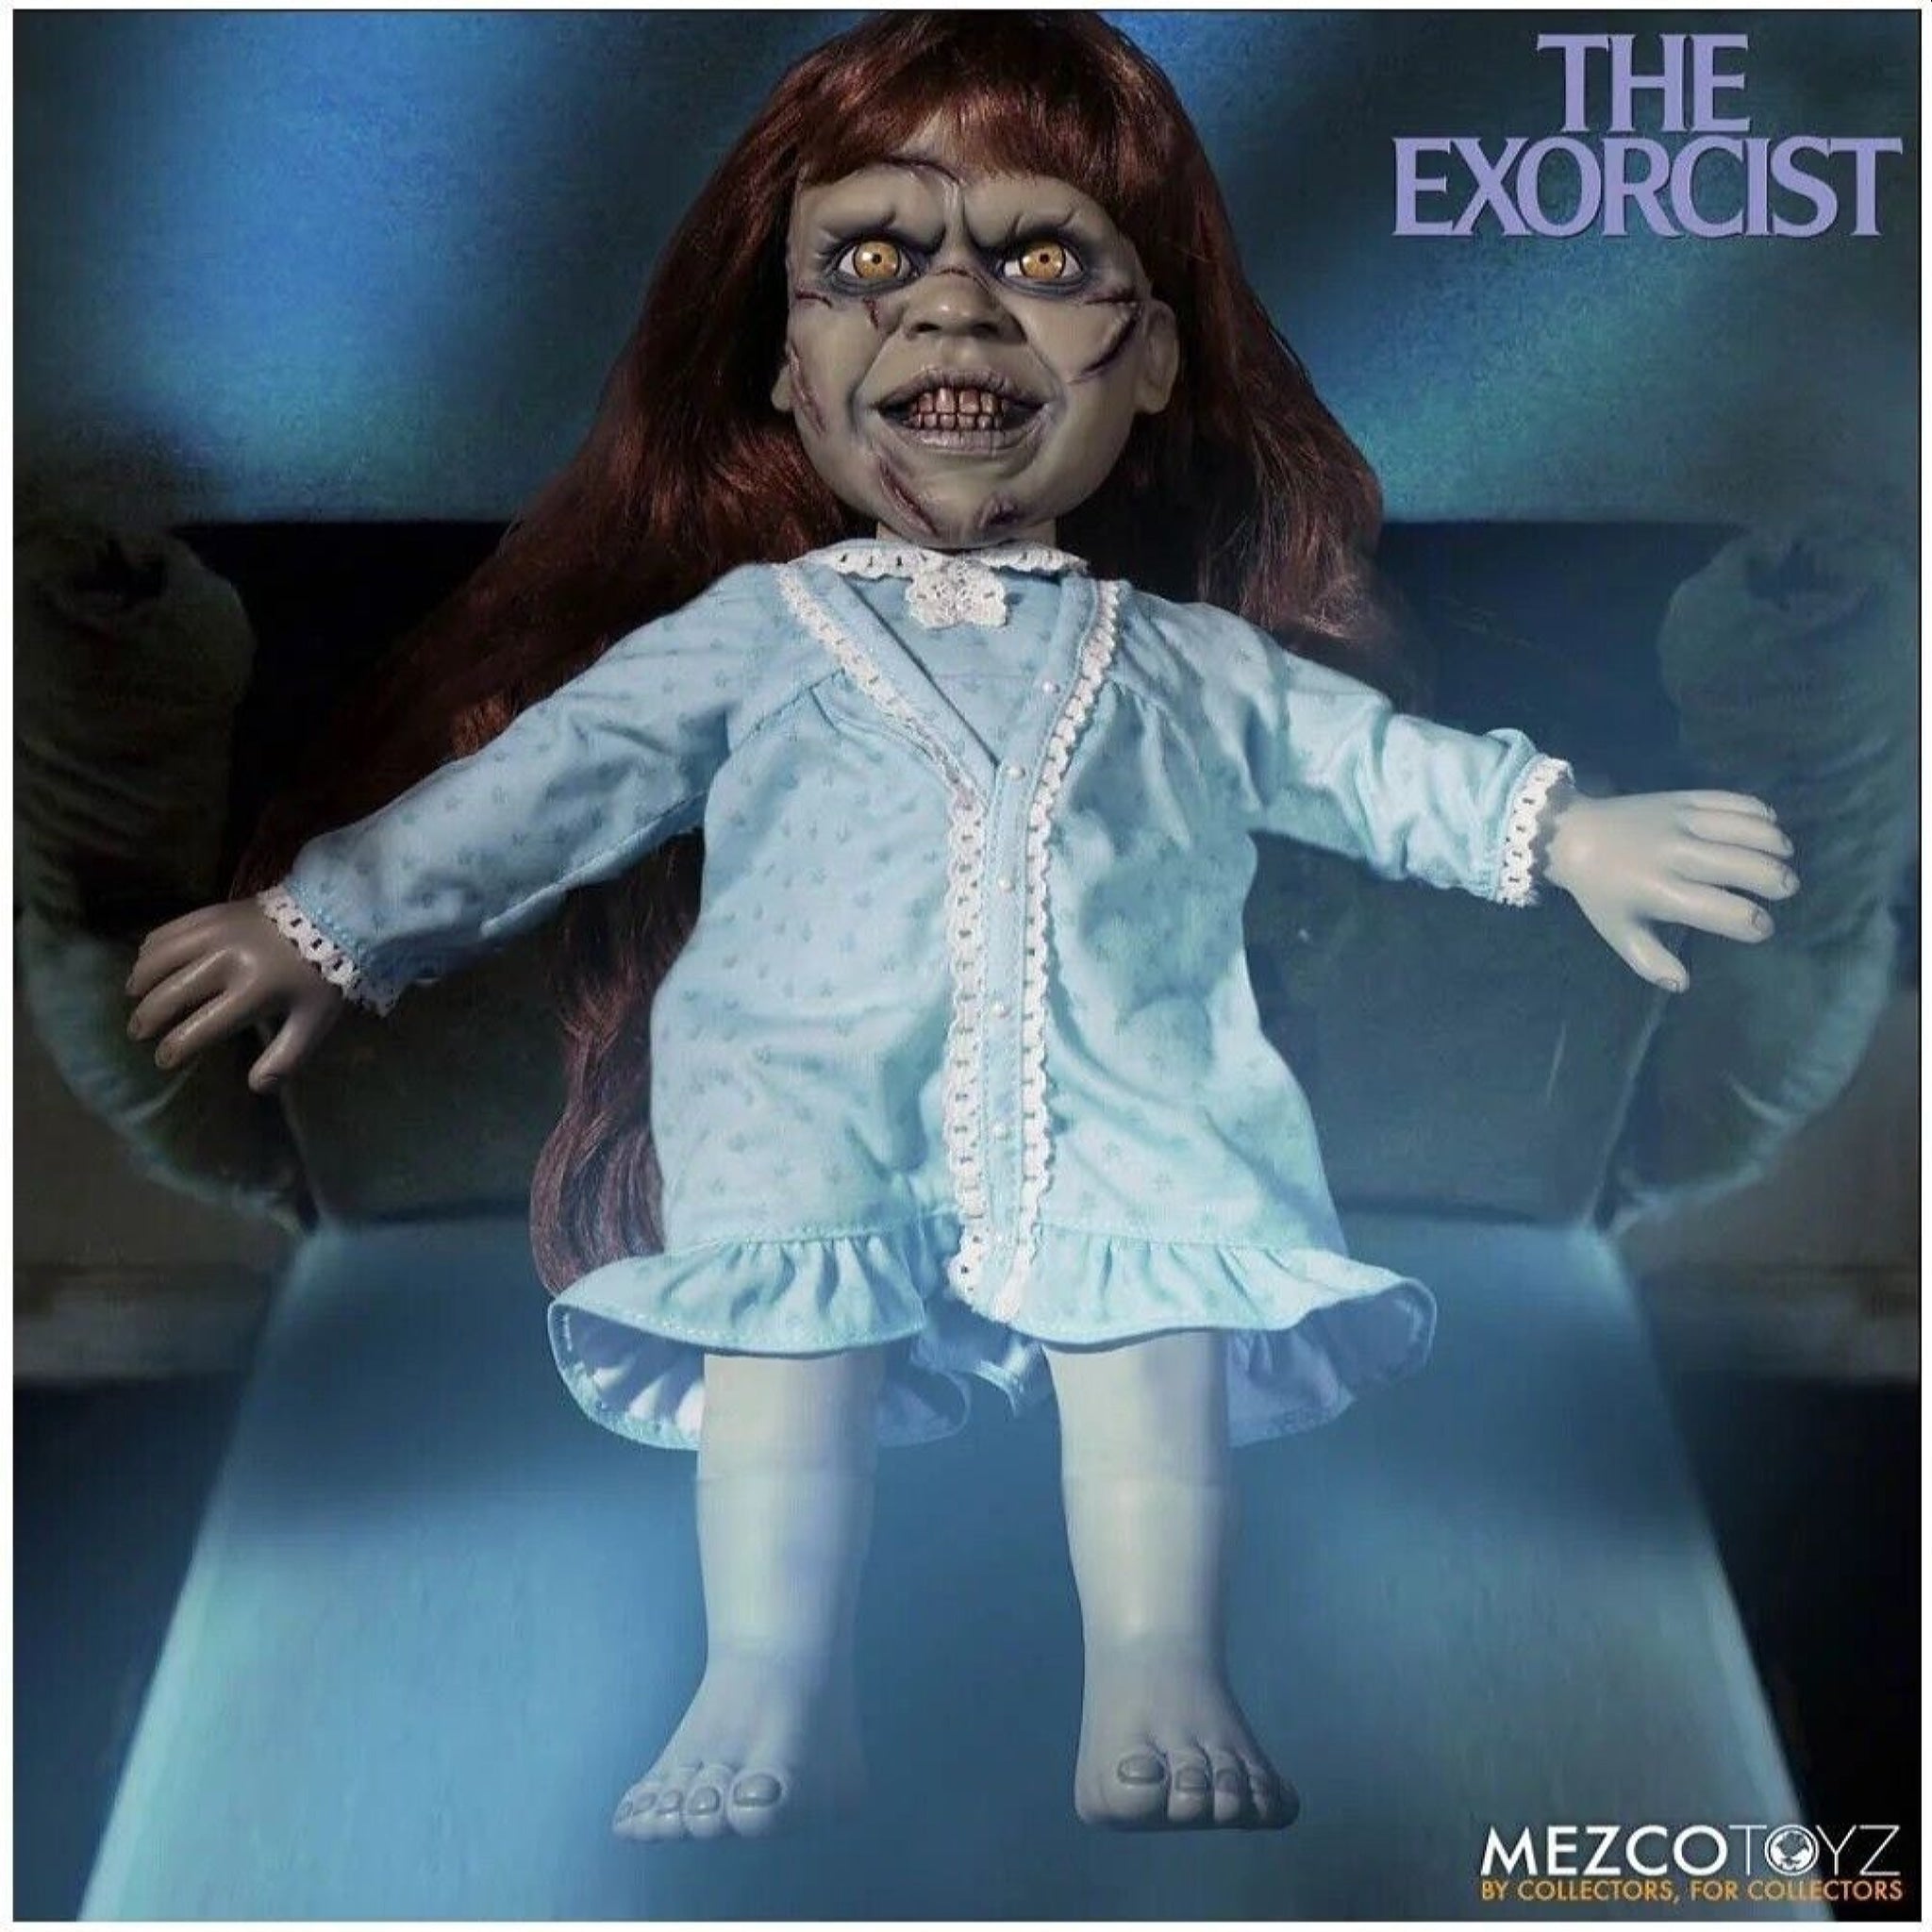 Mezco Exorcist Mega Talking 15 inch Figure